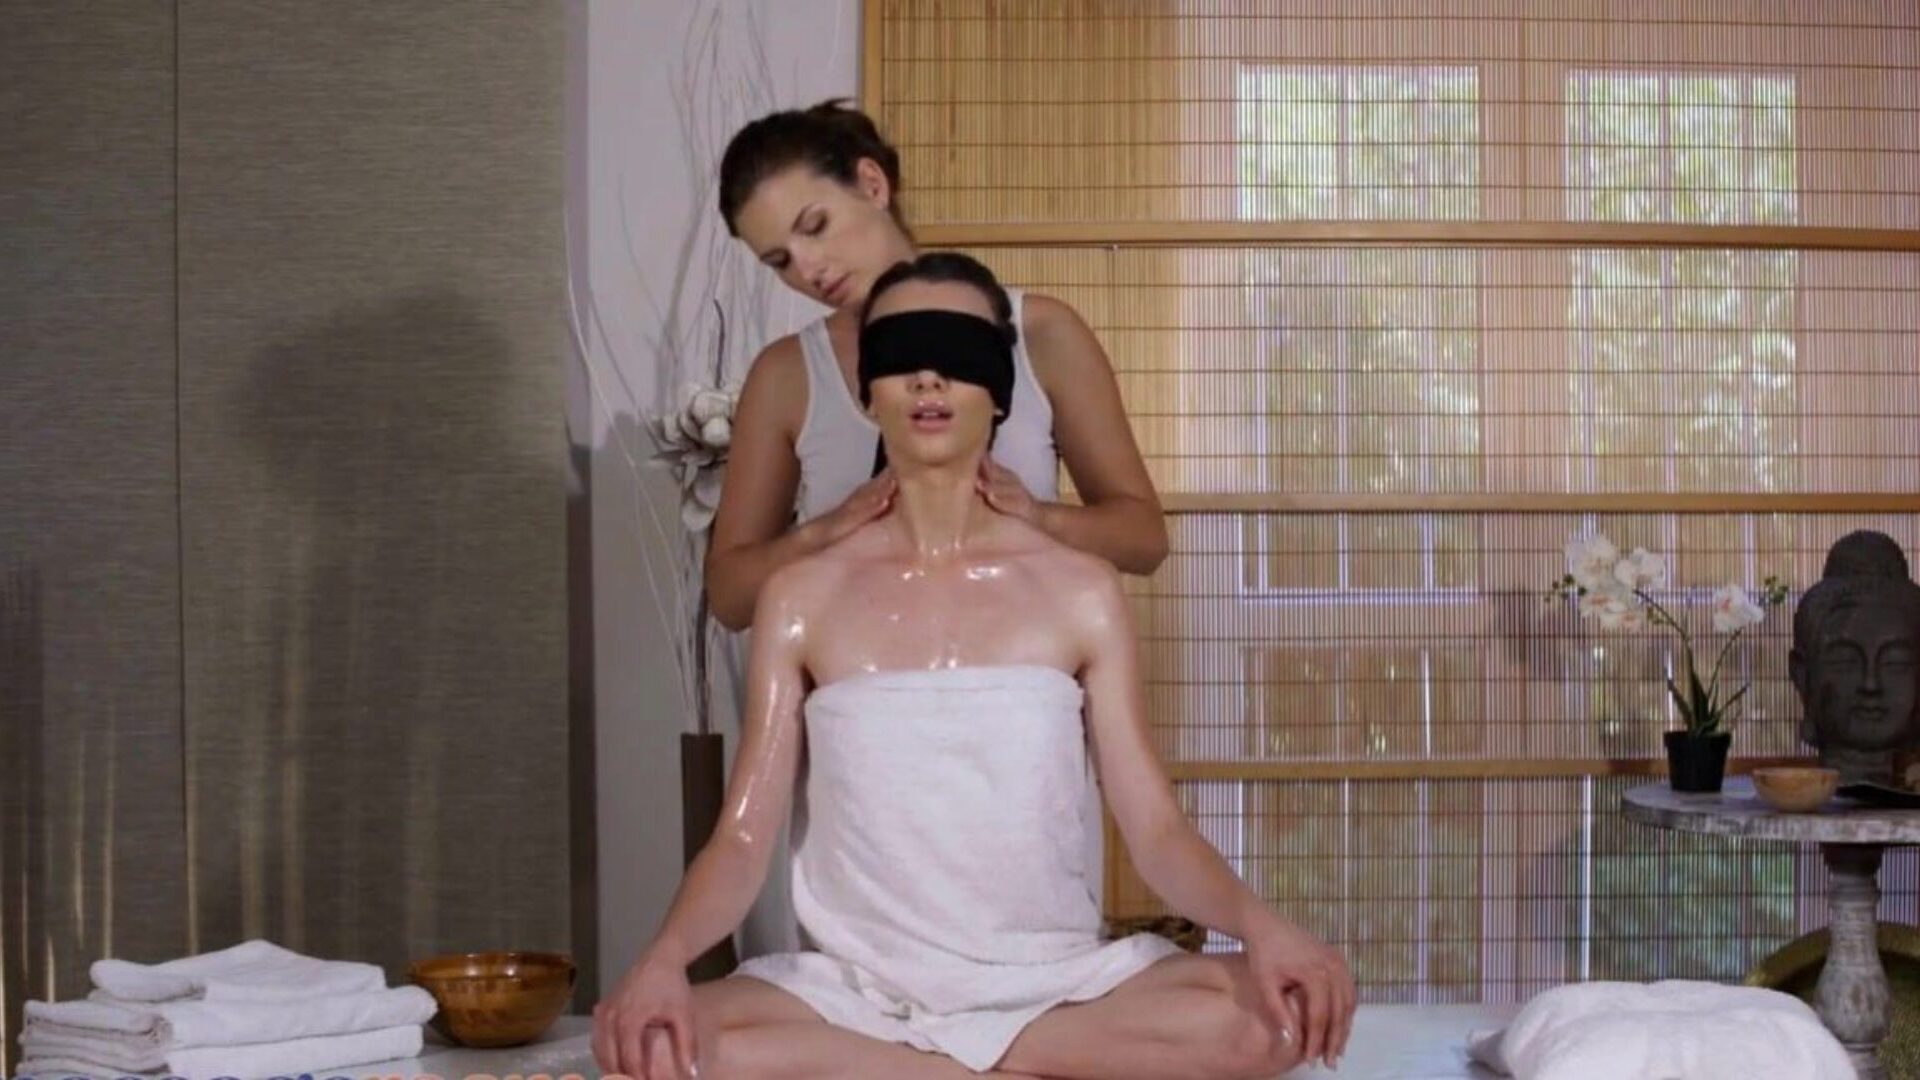 camere de masaj matur jenifer jane lesbiană foarfecă legat la ochi adel morel